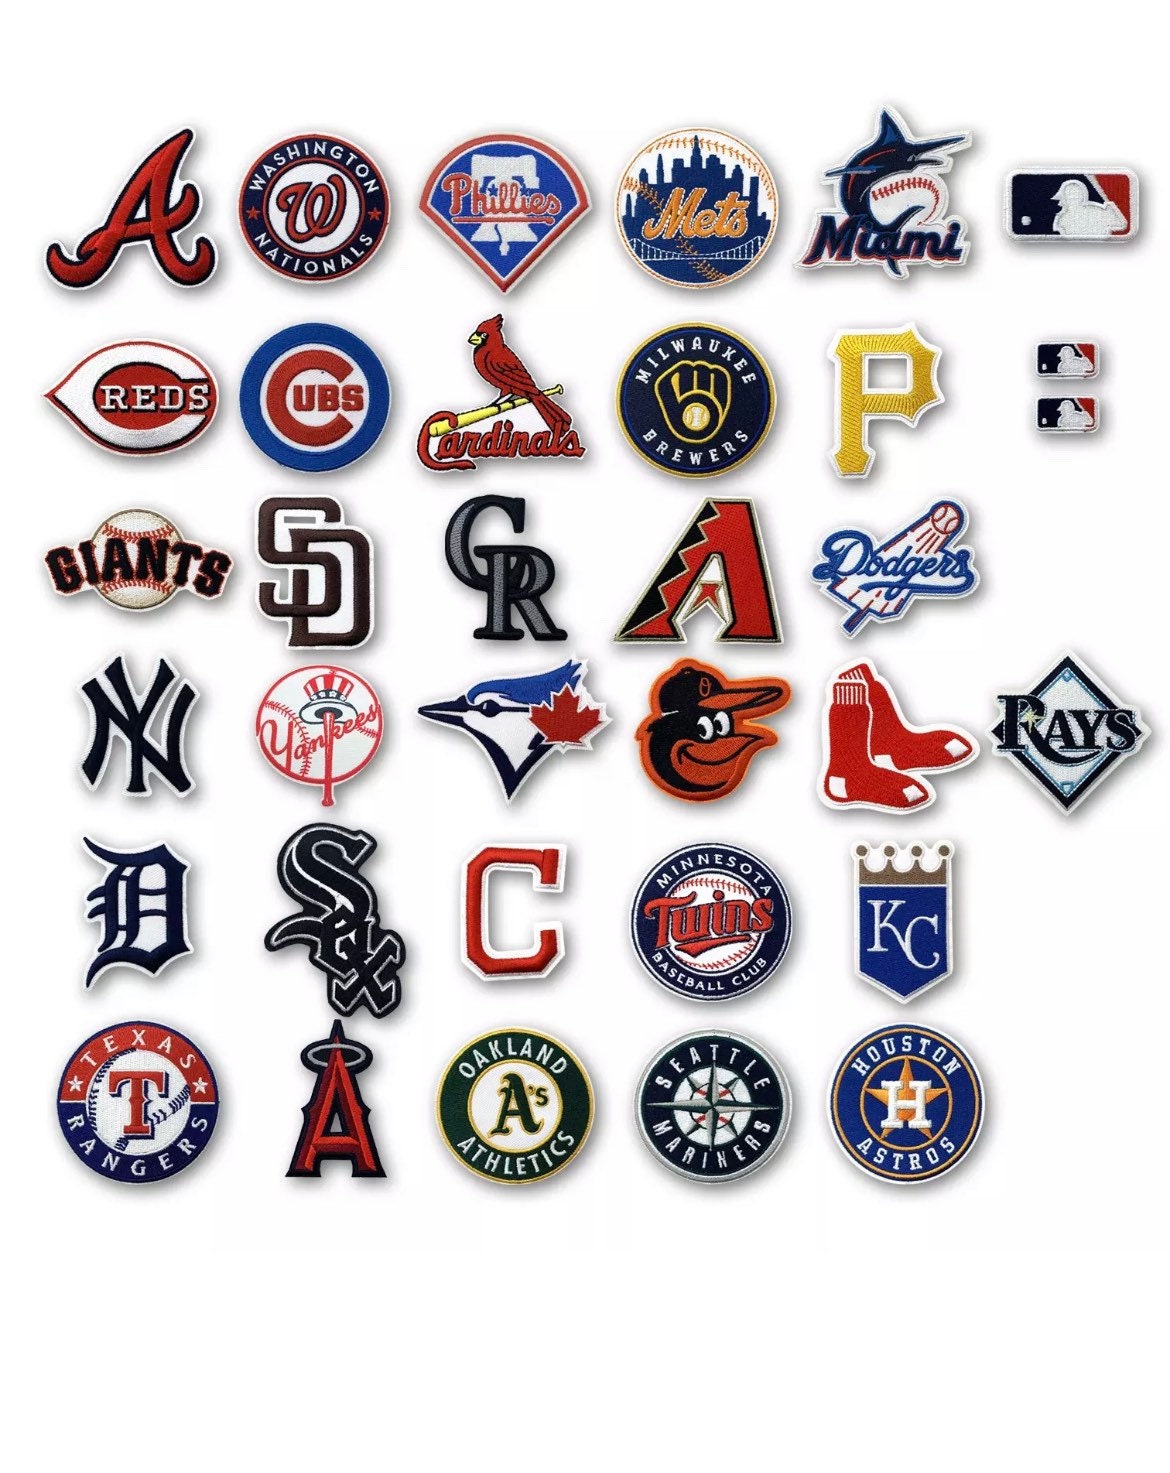 Major League Baseball team logos by Chenglor55 on deviantART  Baseball  teams logo Mlb team logos Major league baseball teams